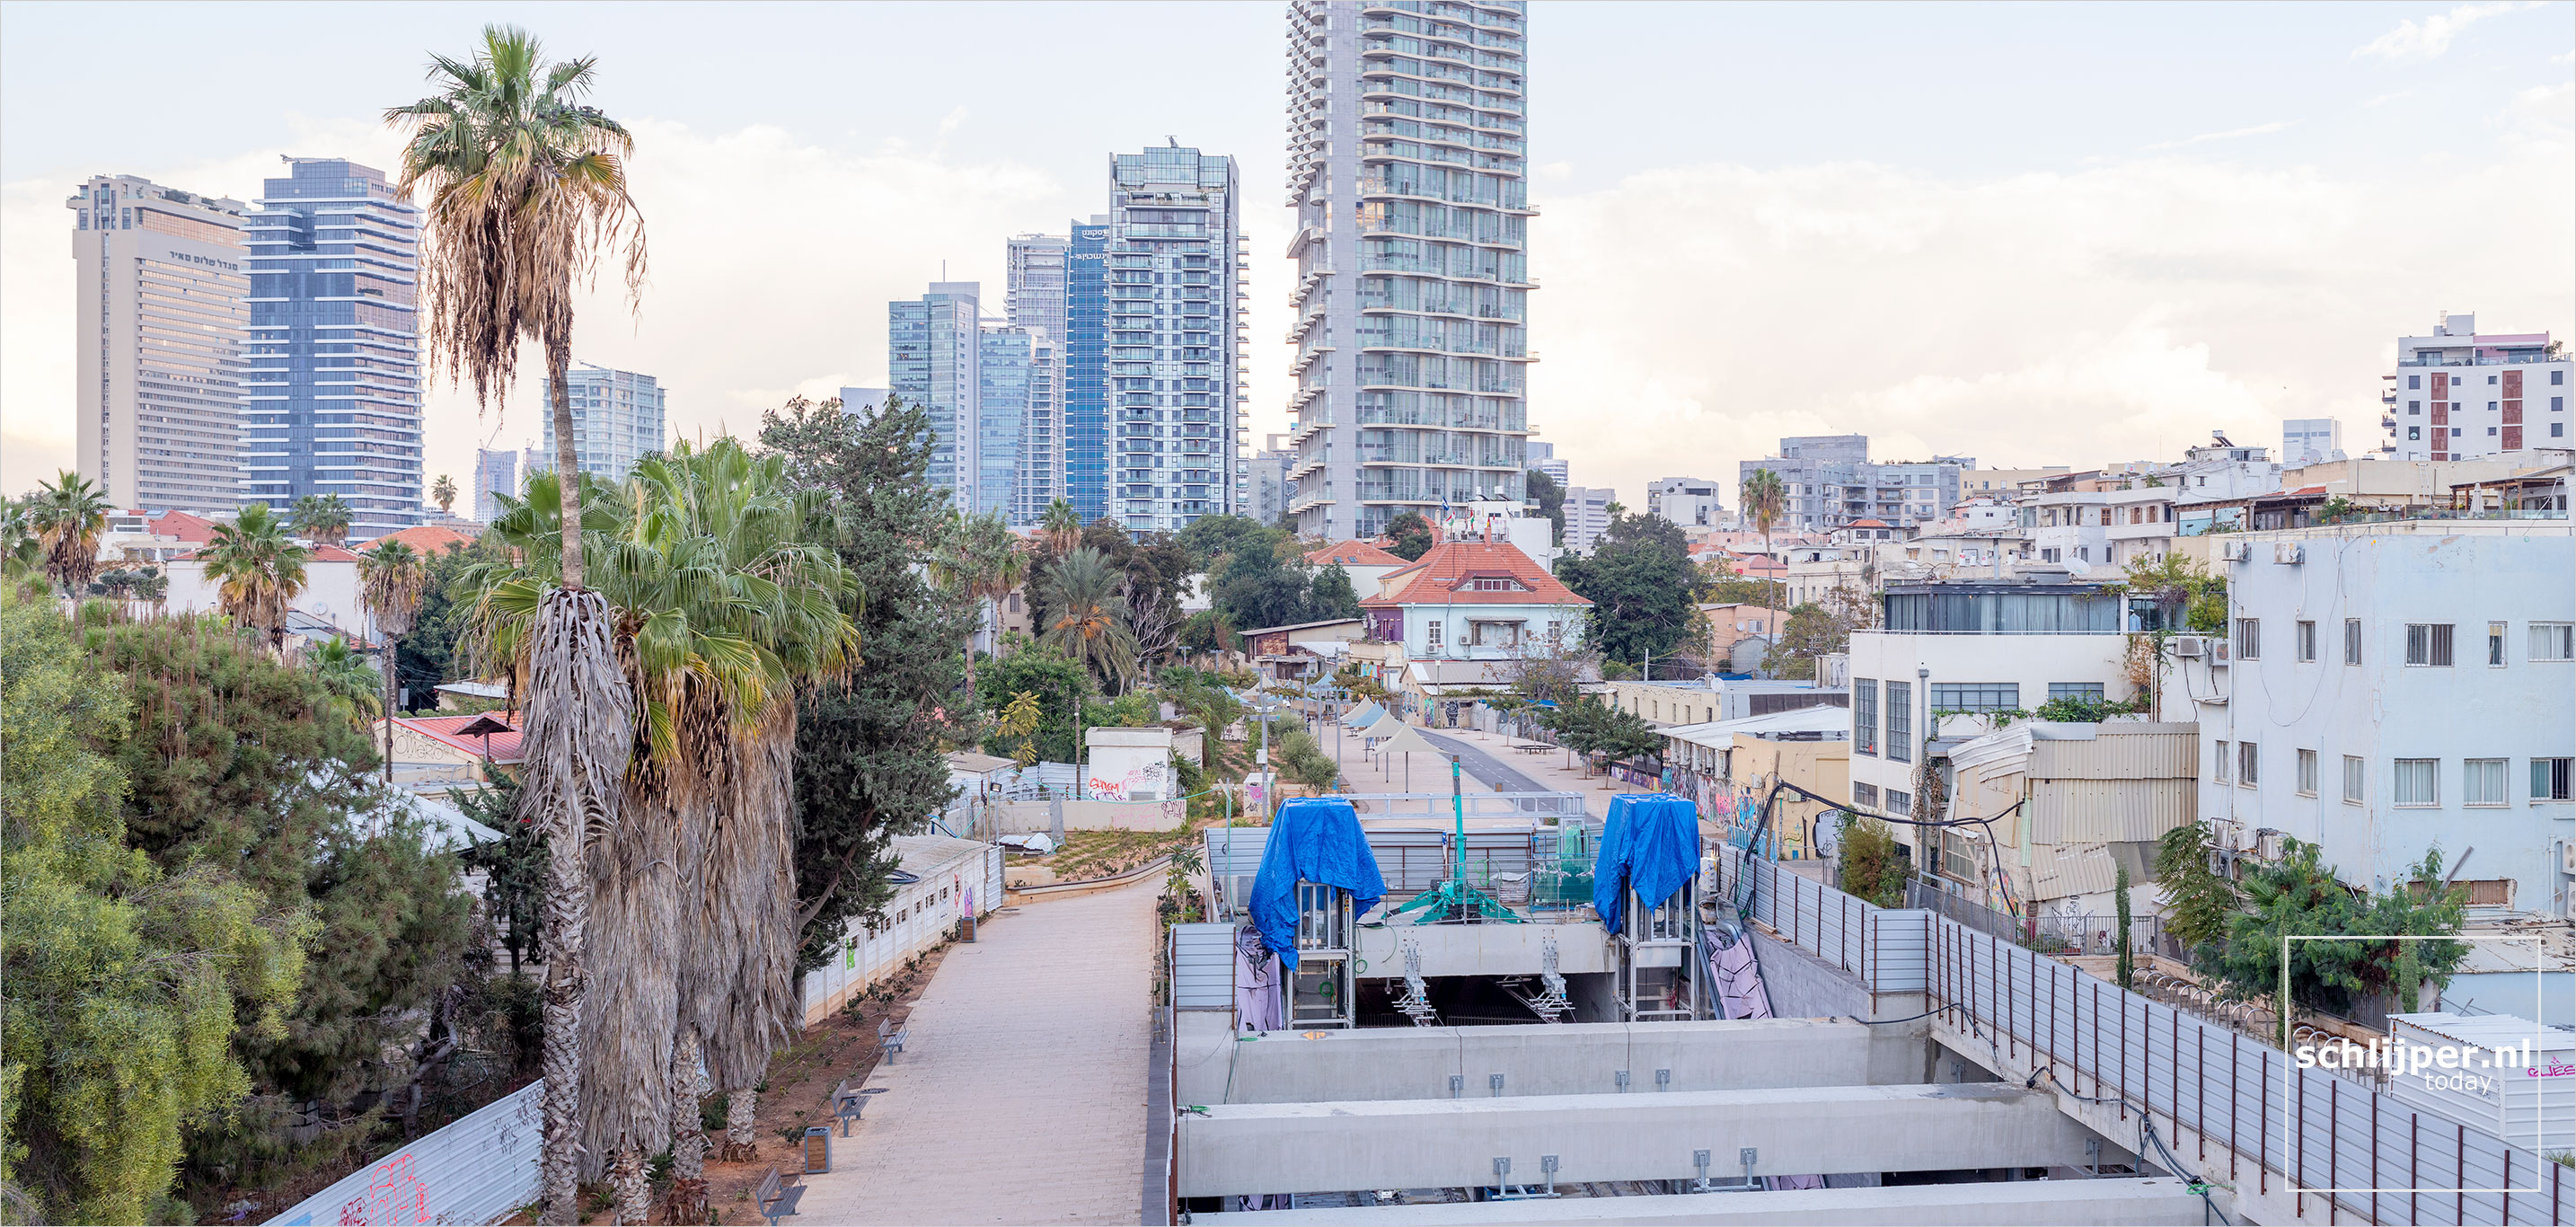 Israel, Tel Aviv, 21 november 2021